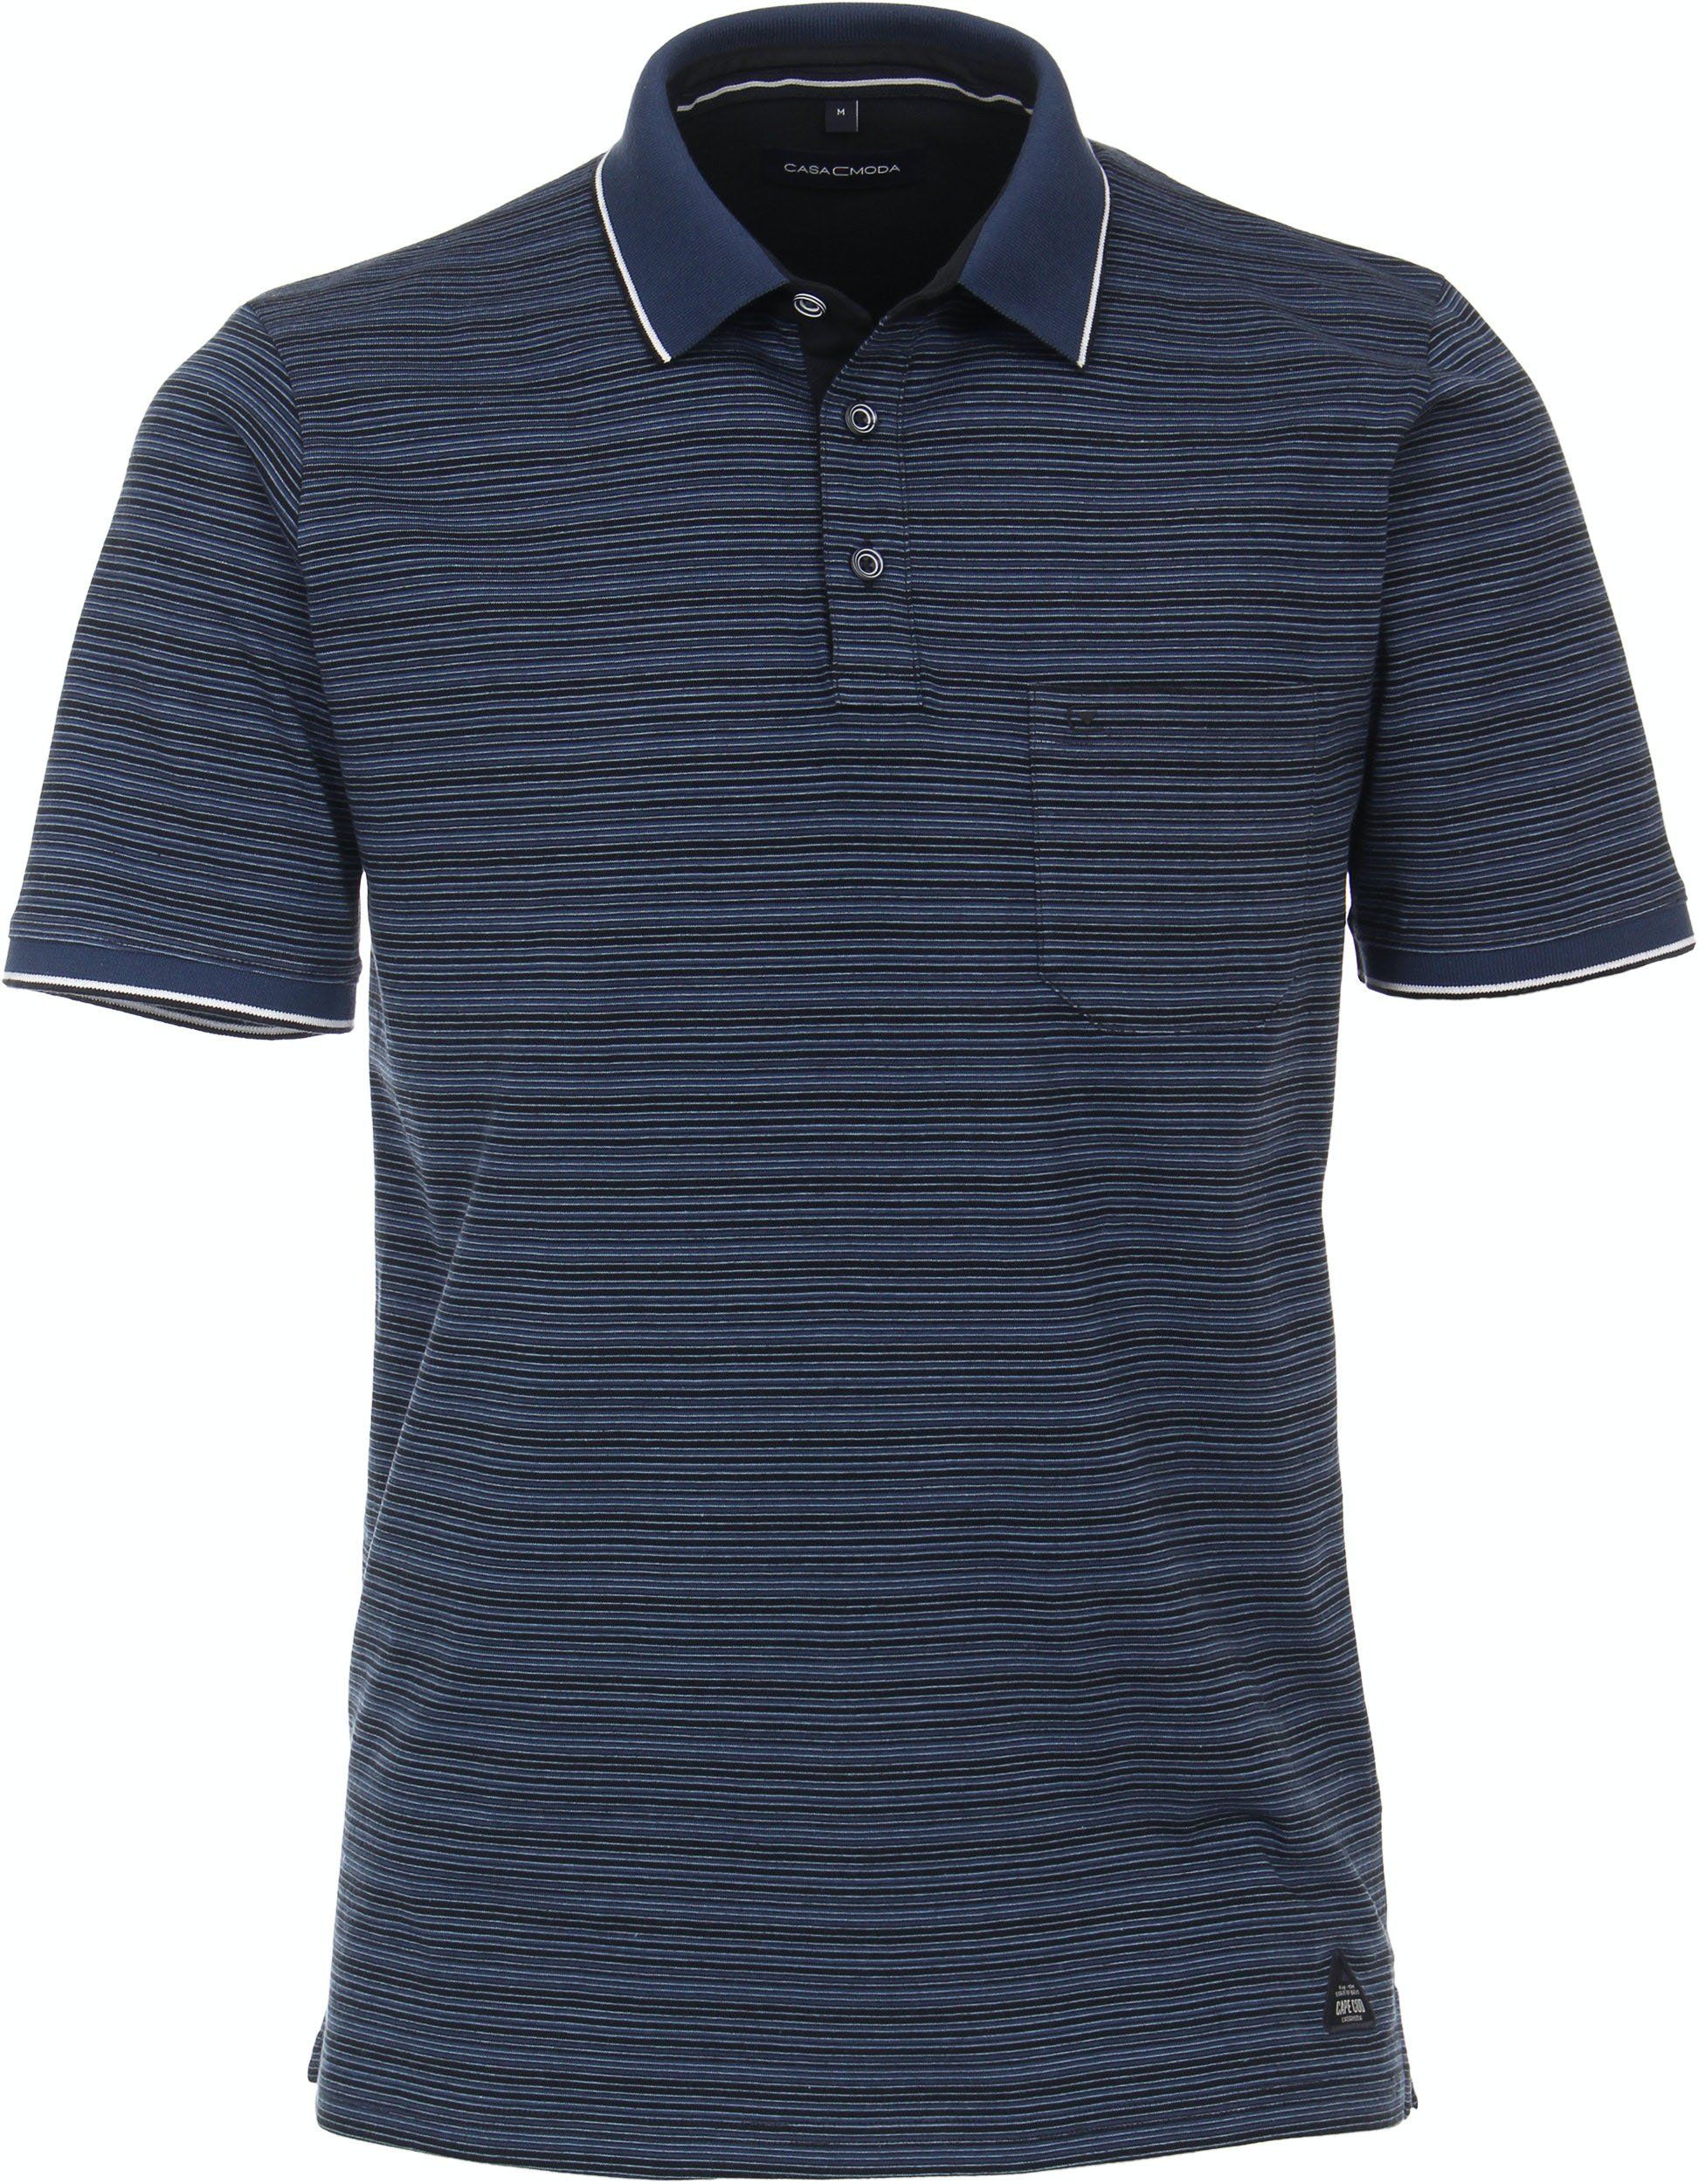 Casa Moda Polo Shirt Dark Stripes Blue Dark Blue size L